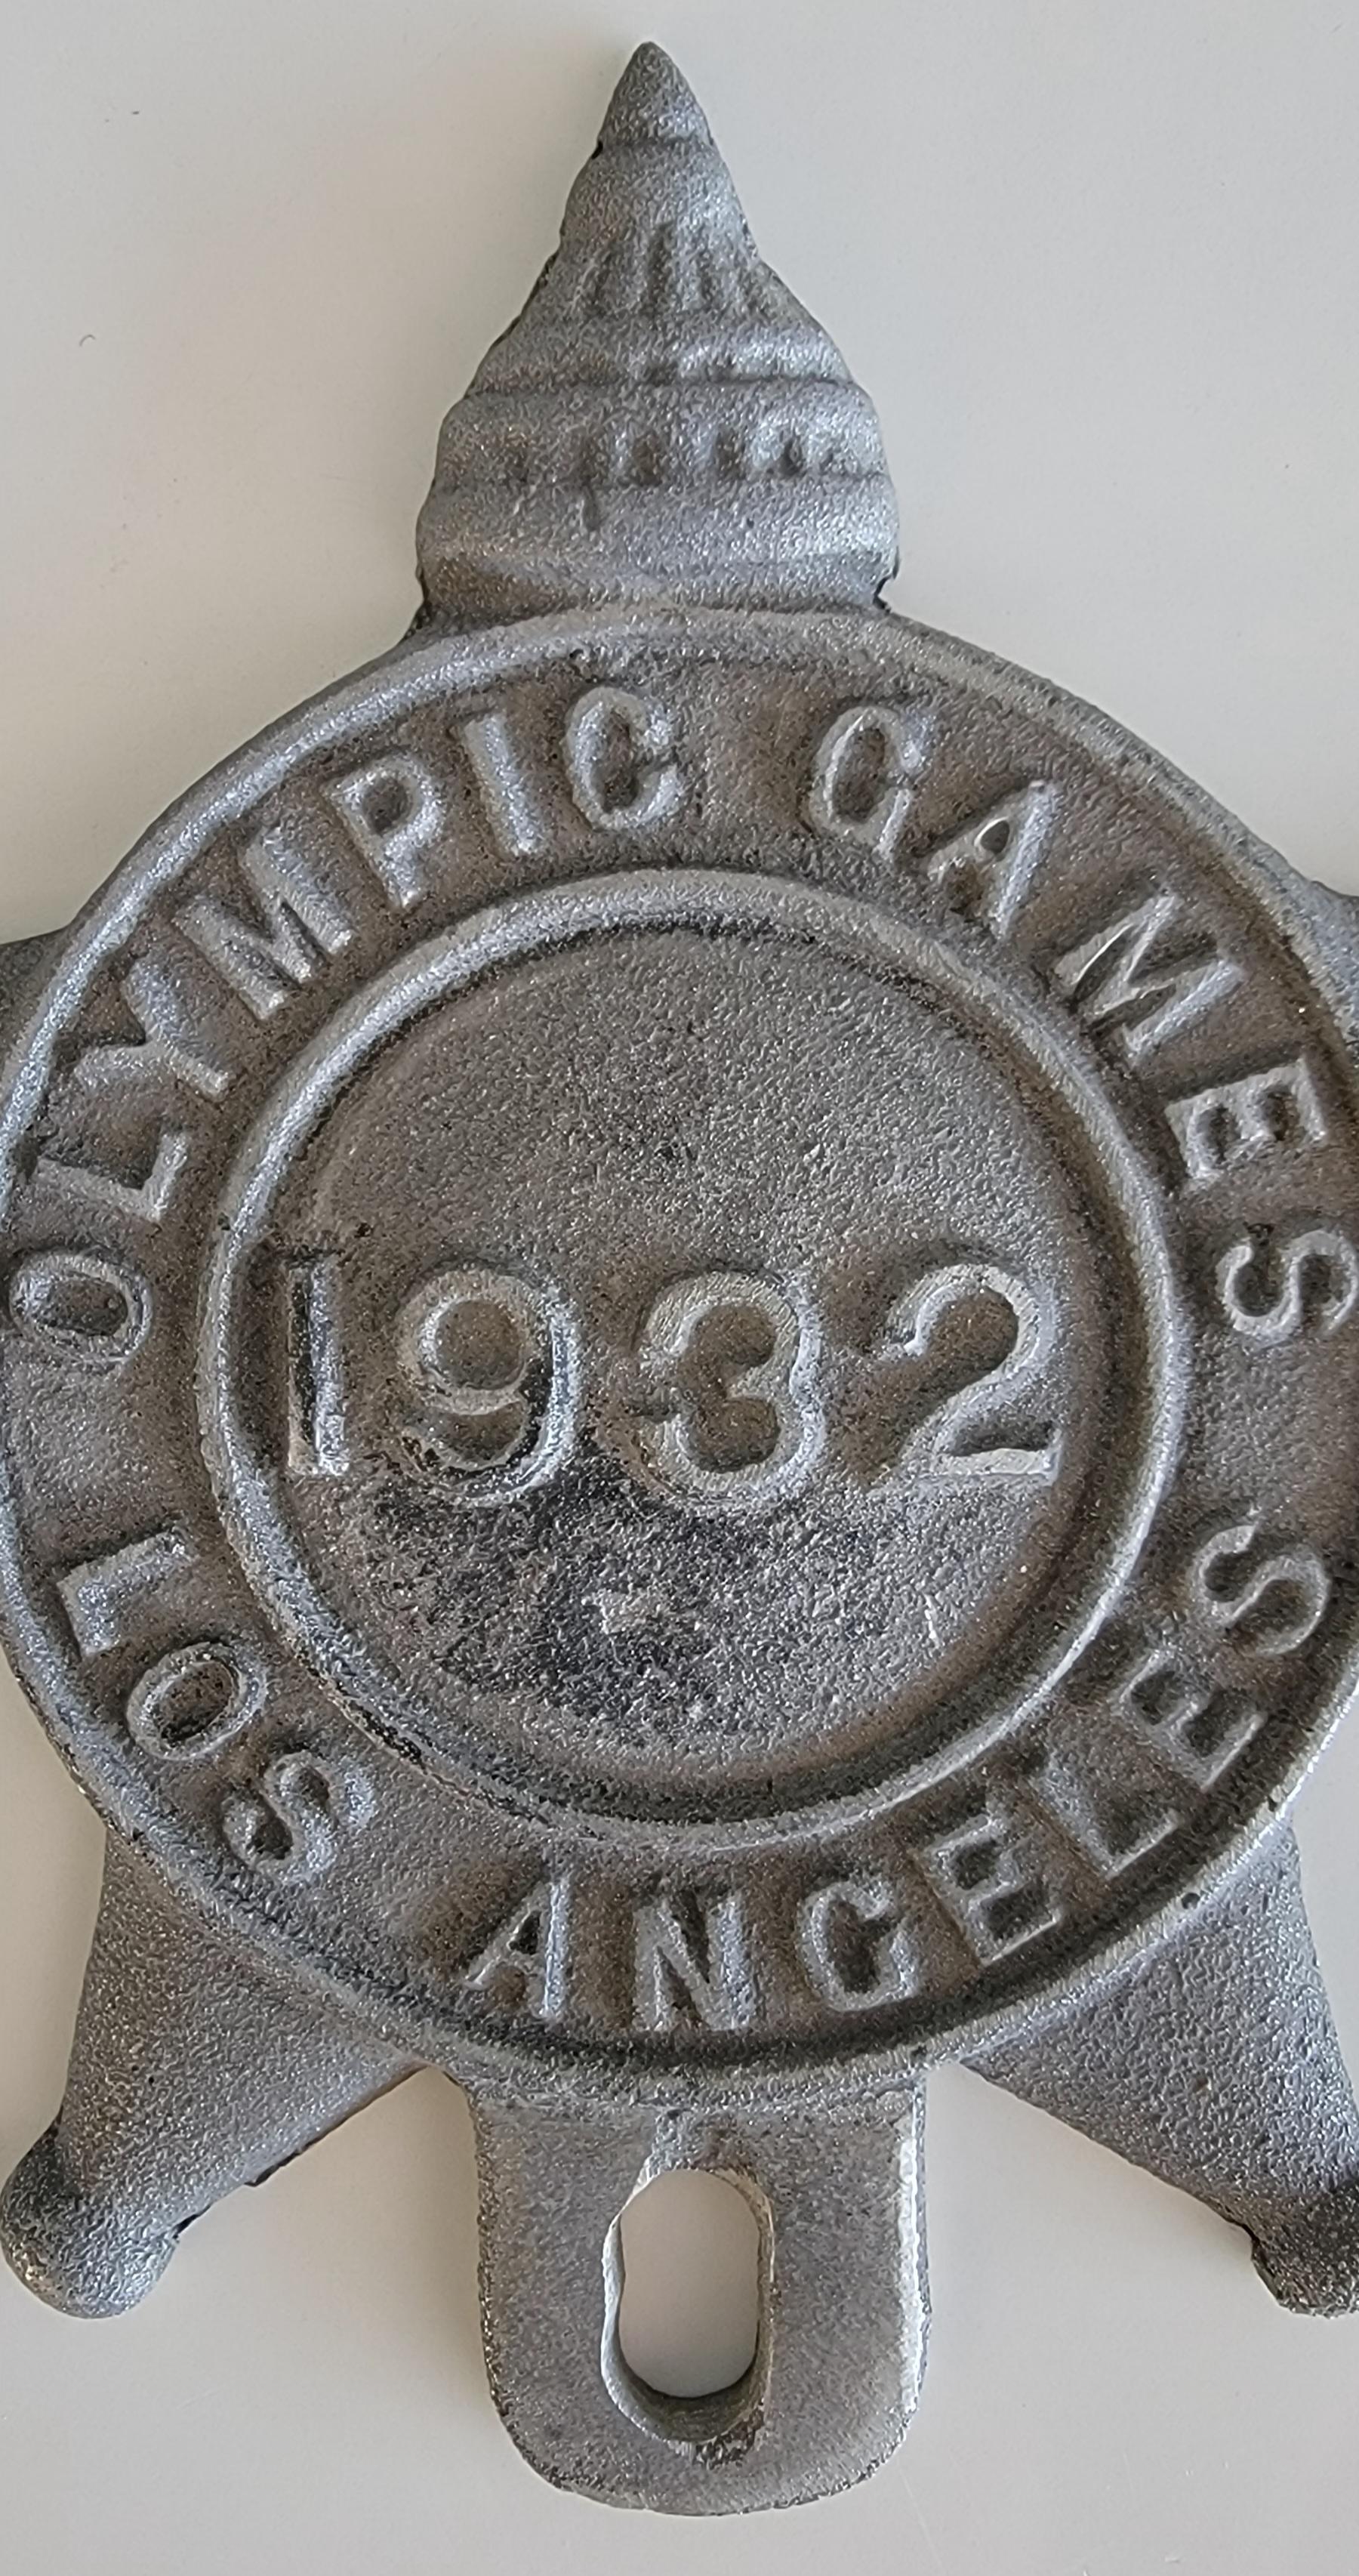 Original 1932 Los Angeles Summer Olympics license plate fob. 